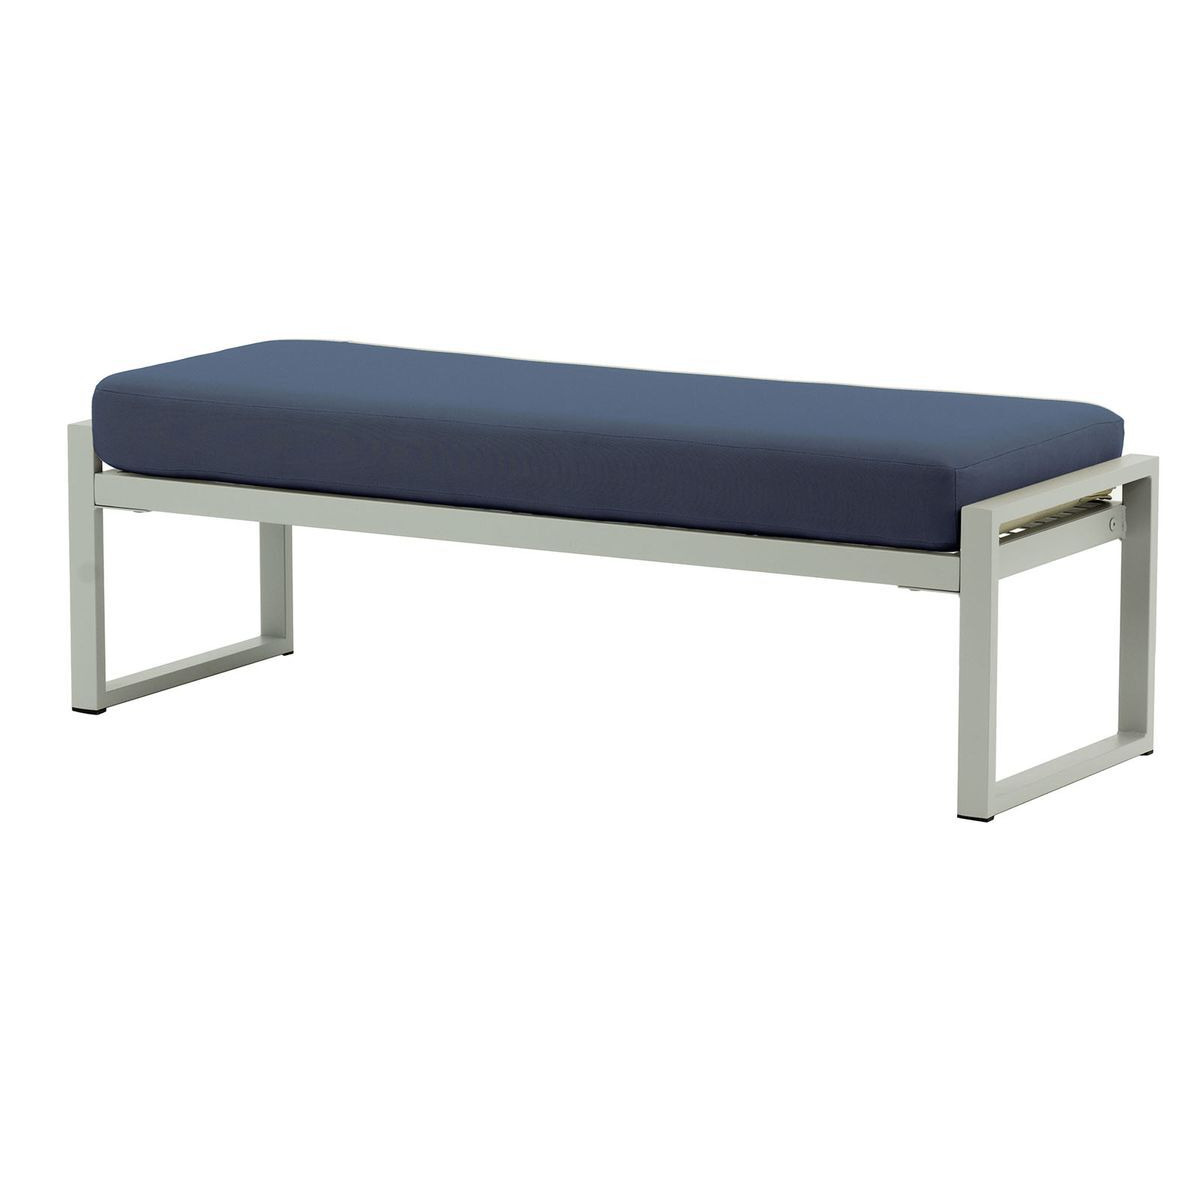 Sunset Garden Bench, navy blue, Leg colour: grey steel - image 1